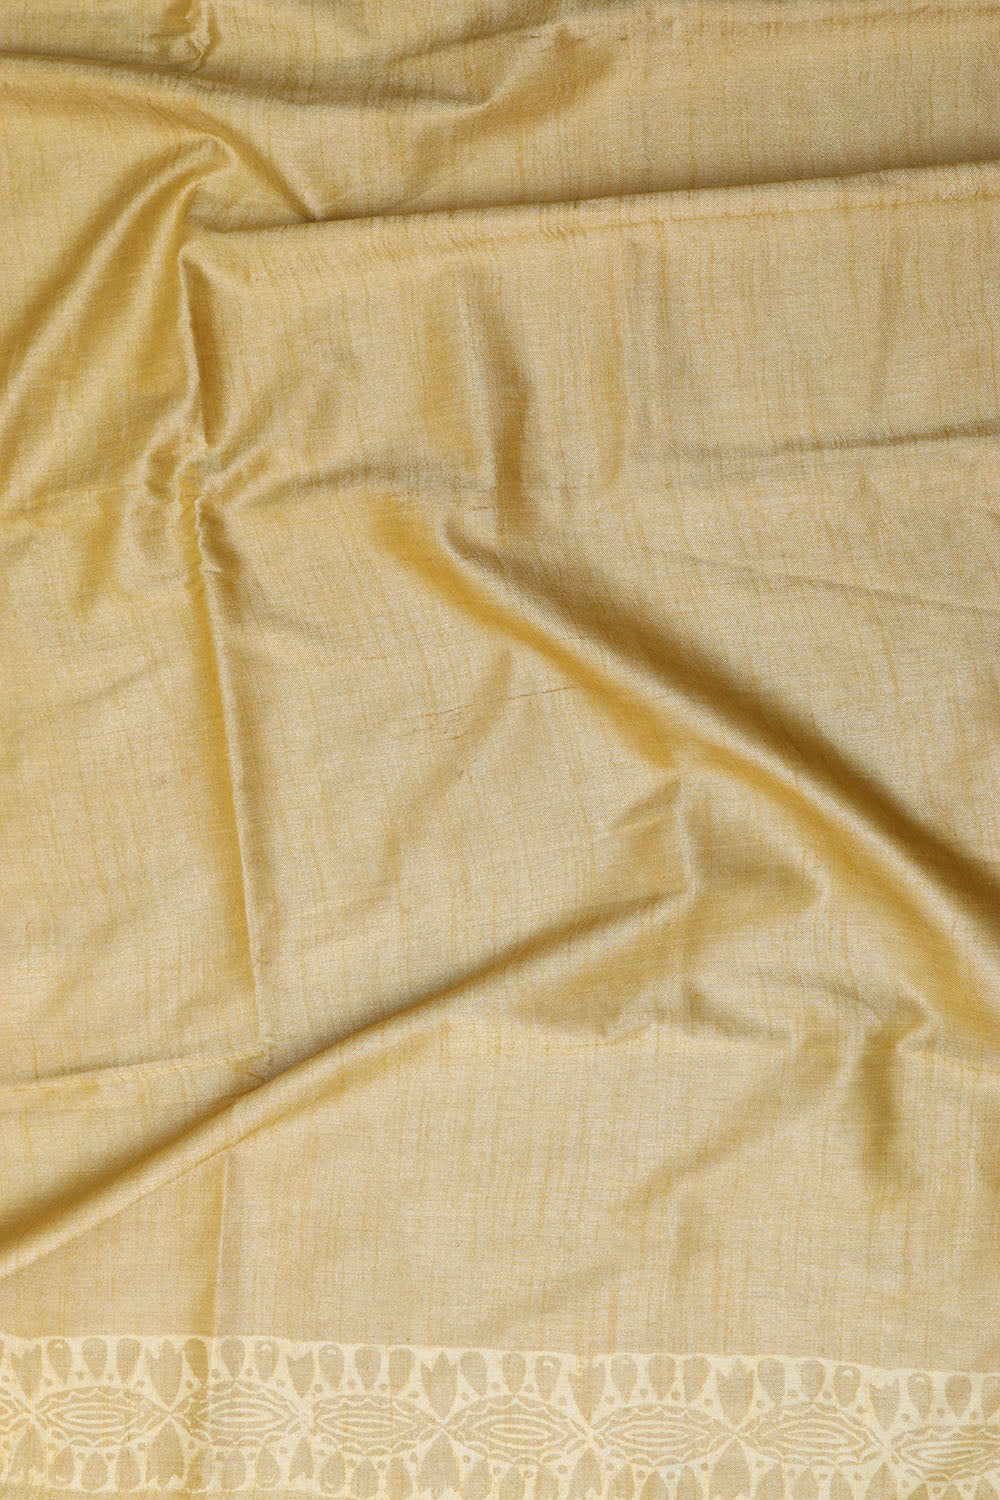 Stunning Yellow Bhagalpur Silk Saree - Elegant and Timeless - Luxurion World